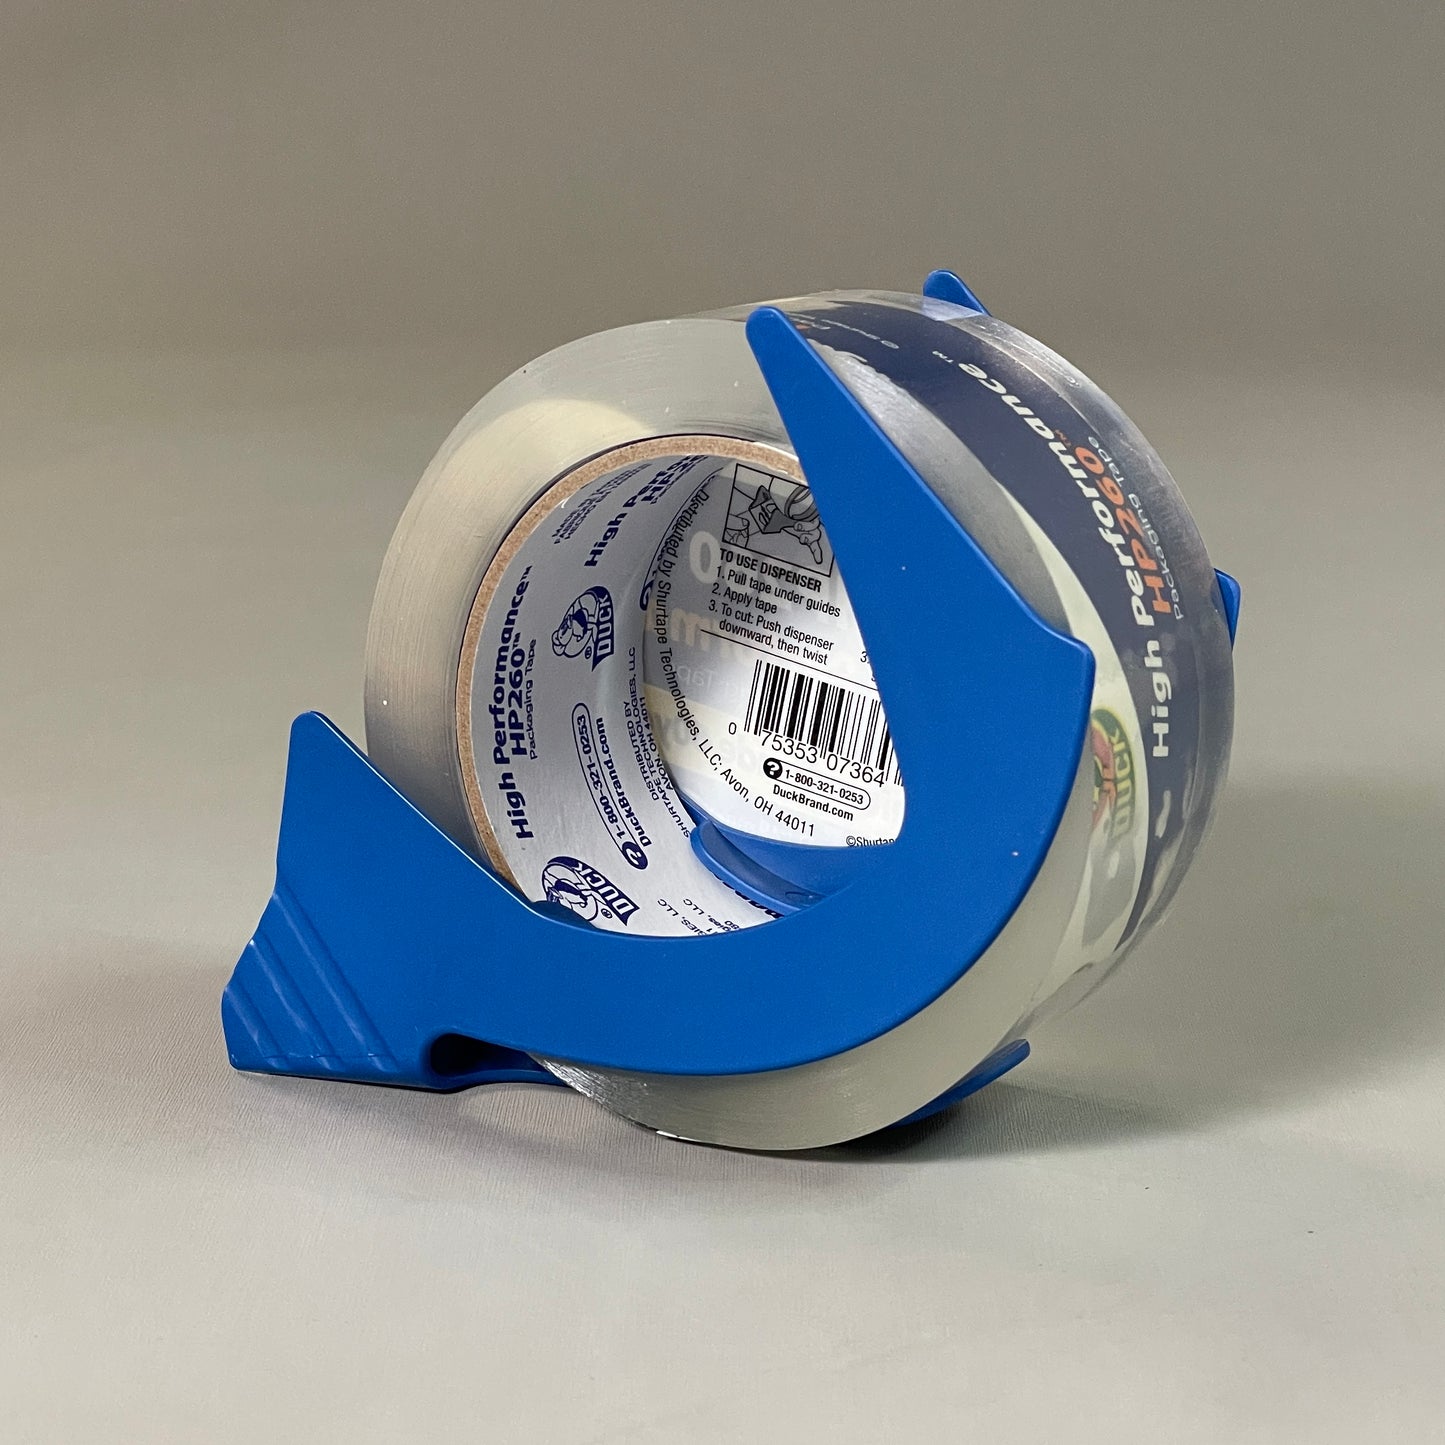 SHURTAPE DUCK High Performance Premium Grade Packaging Tape 393186(New)